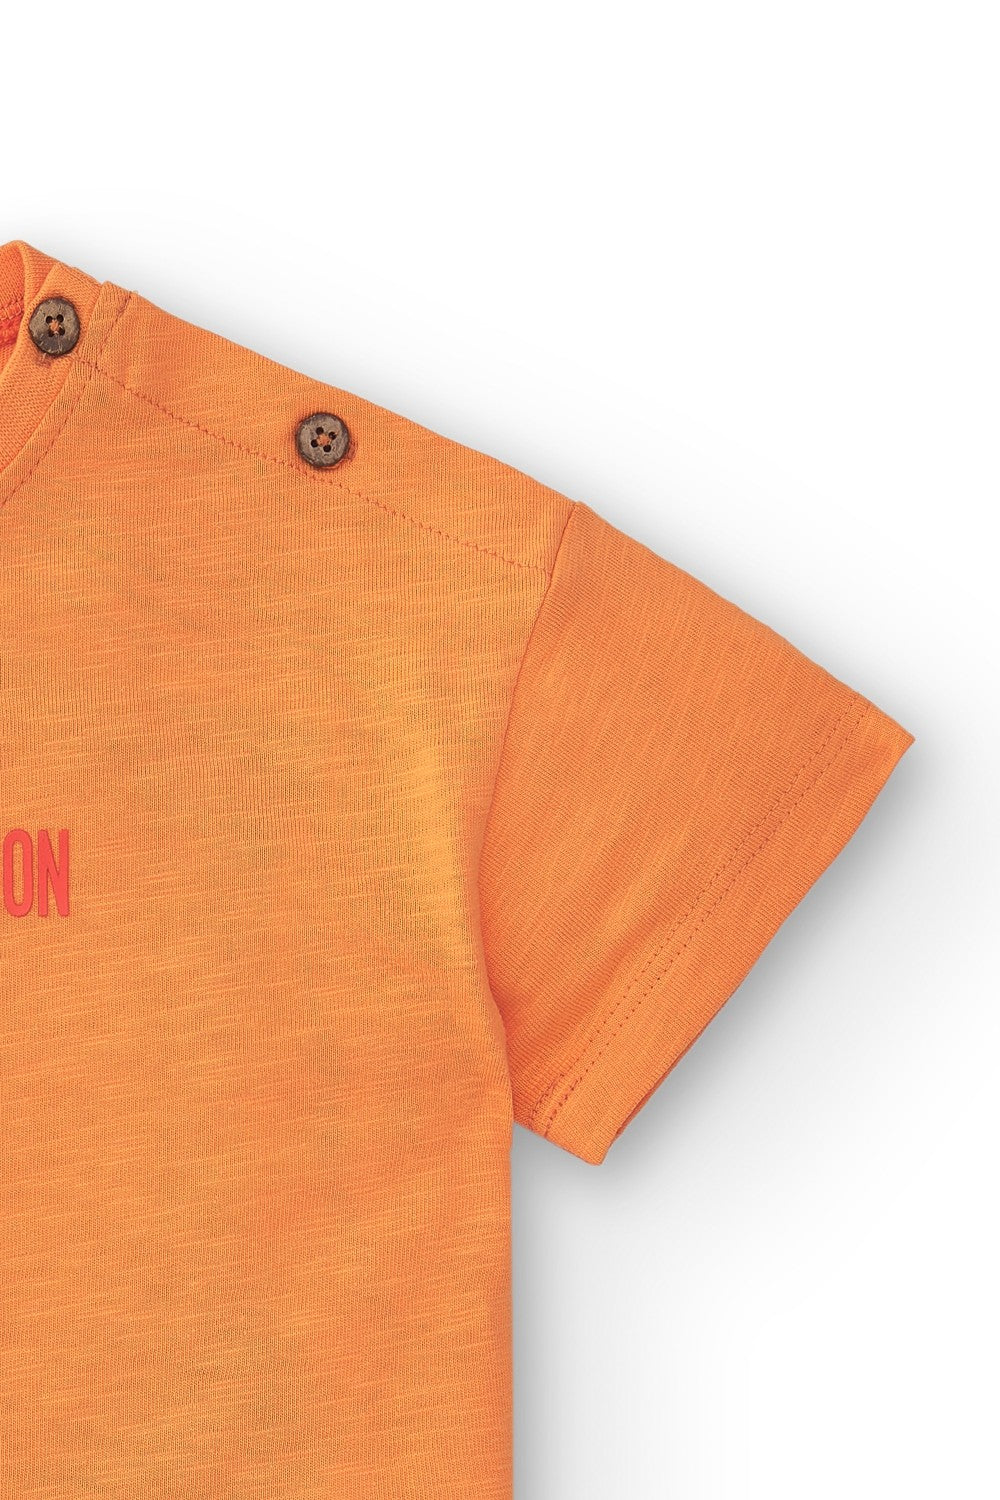 Camiseta de bebé naranja VERANO/Charanga